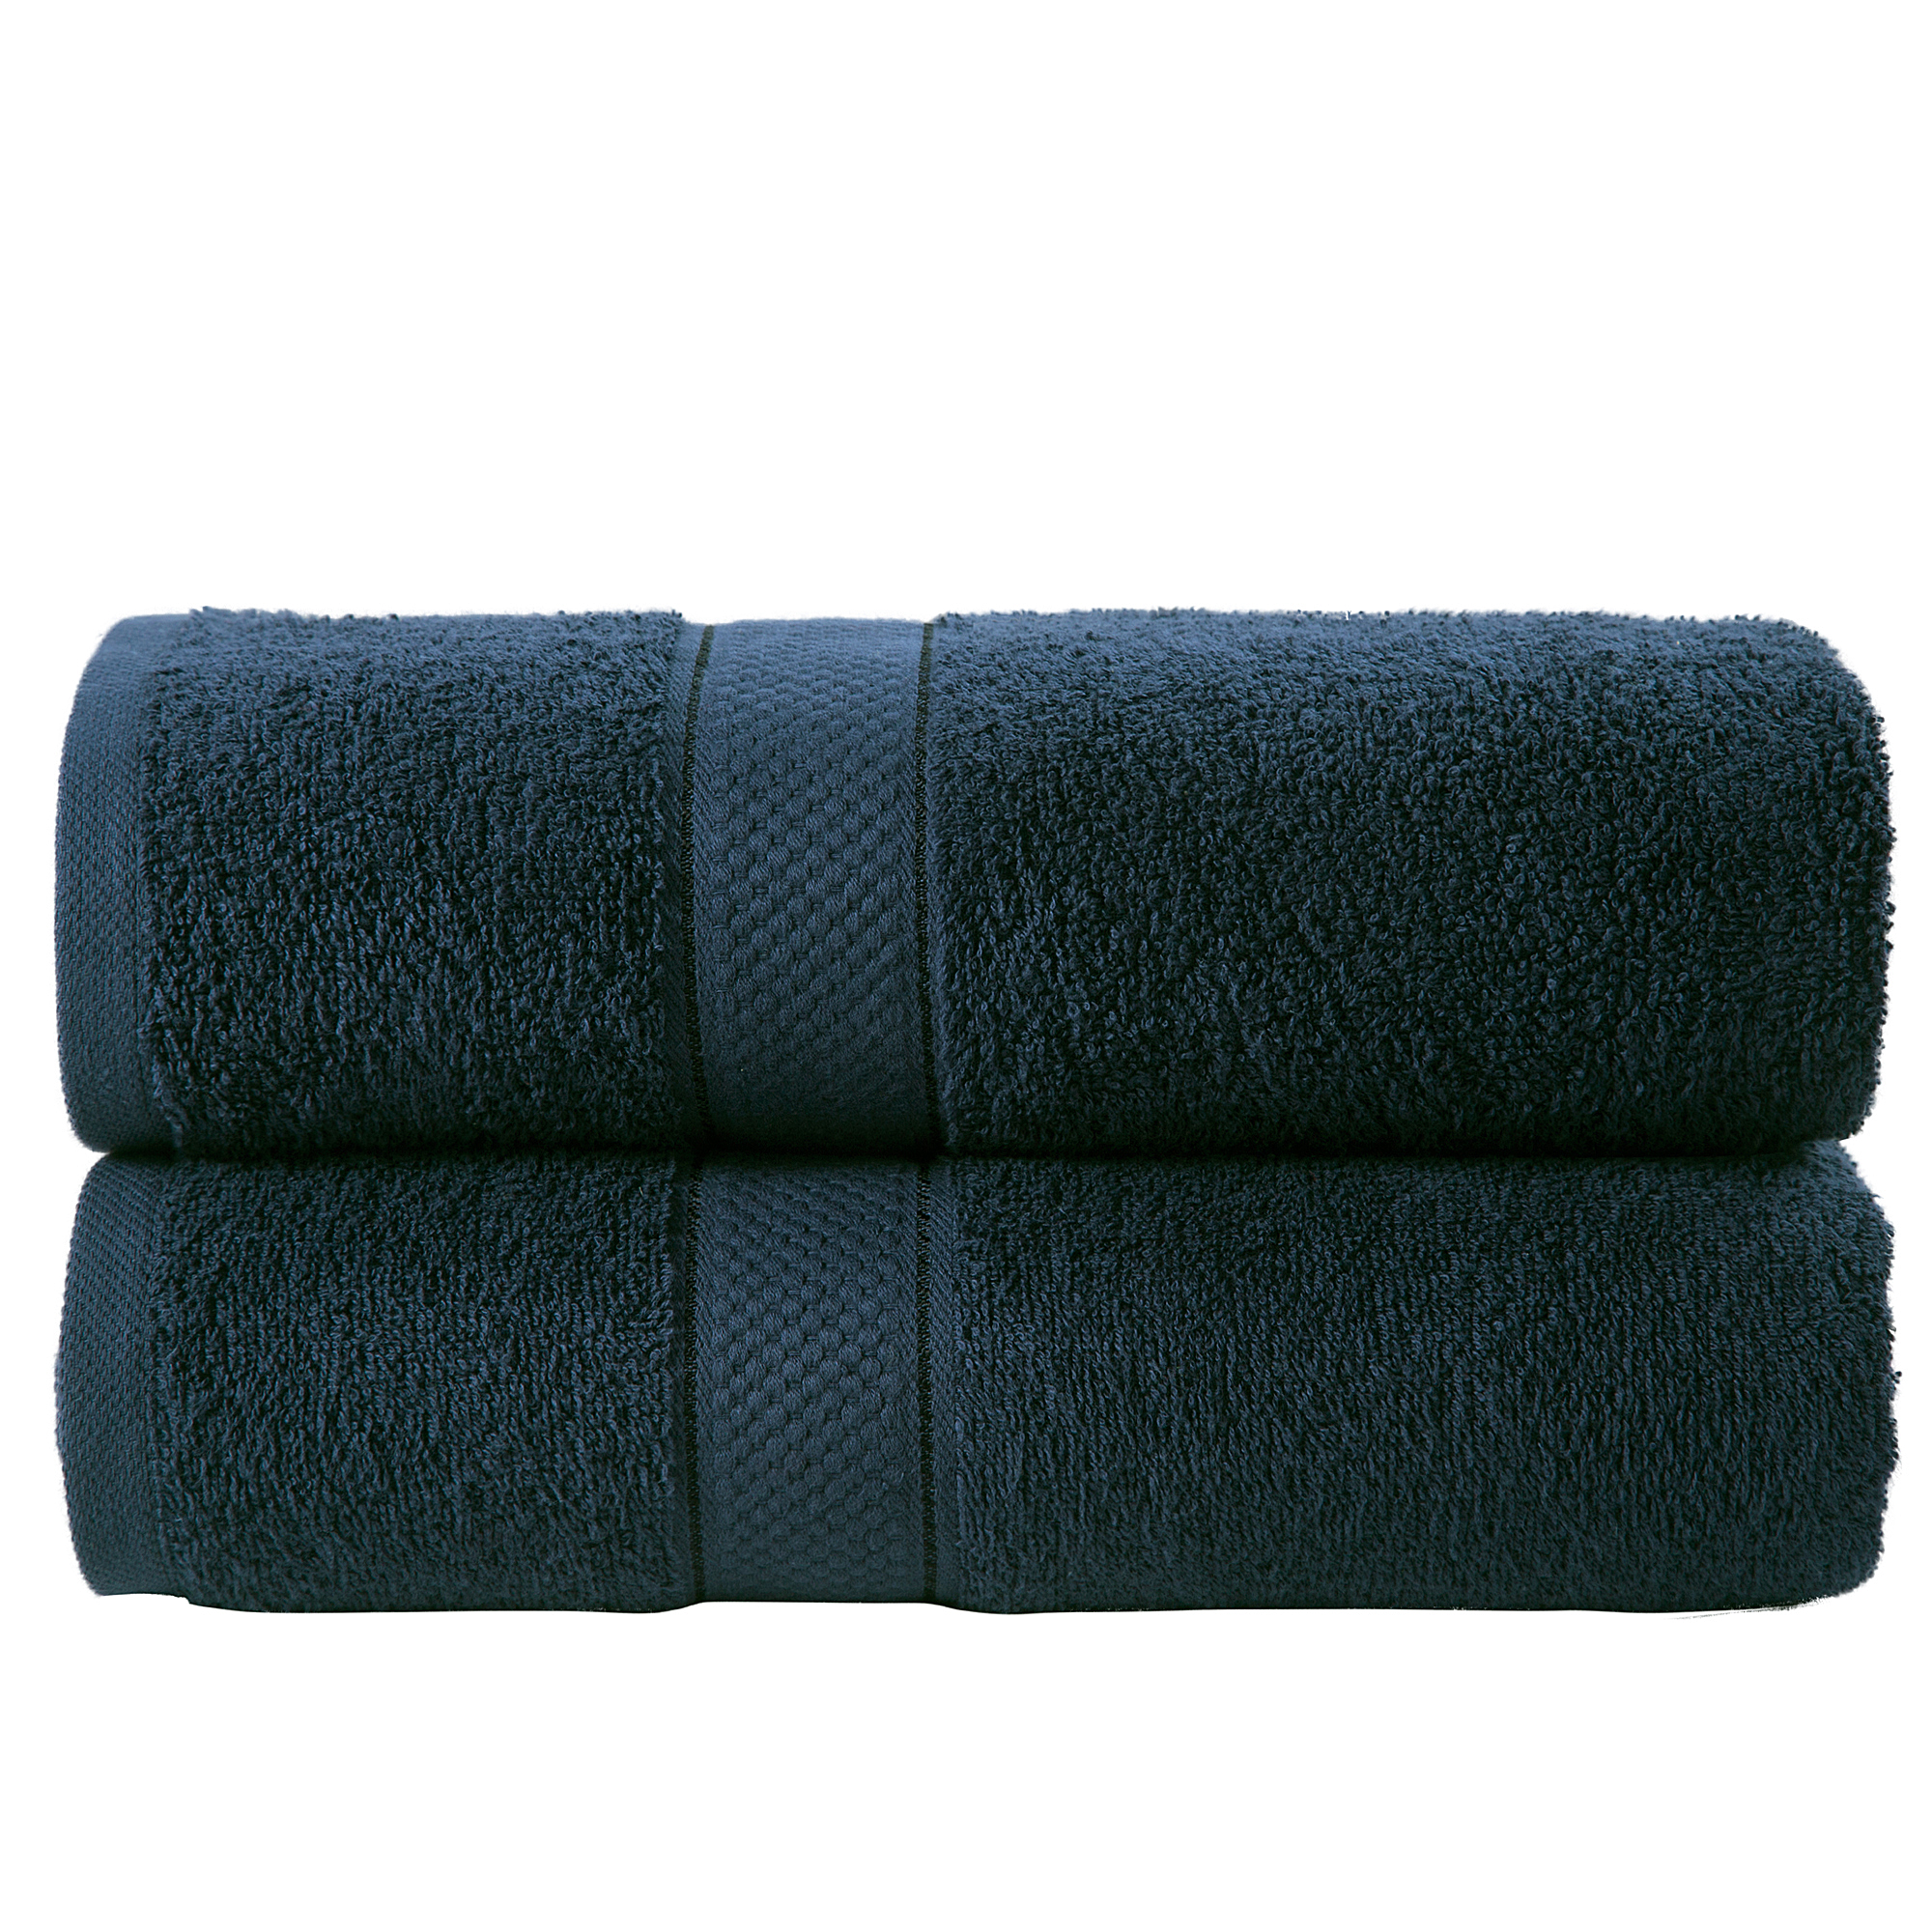 2 Pcs 100 % Cotton Premium Bath Sheet Towel Bale Set Navy Dark Plain